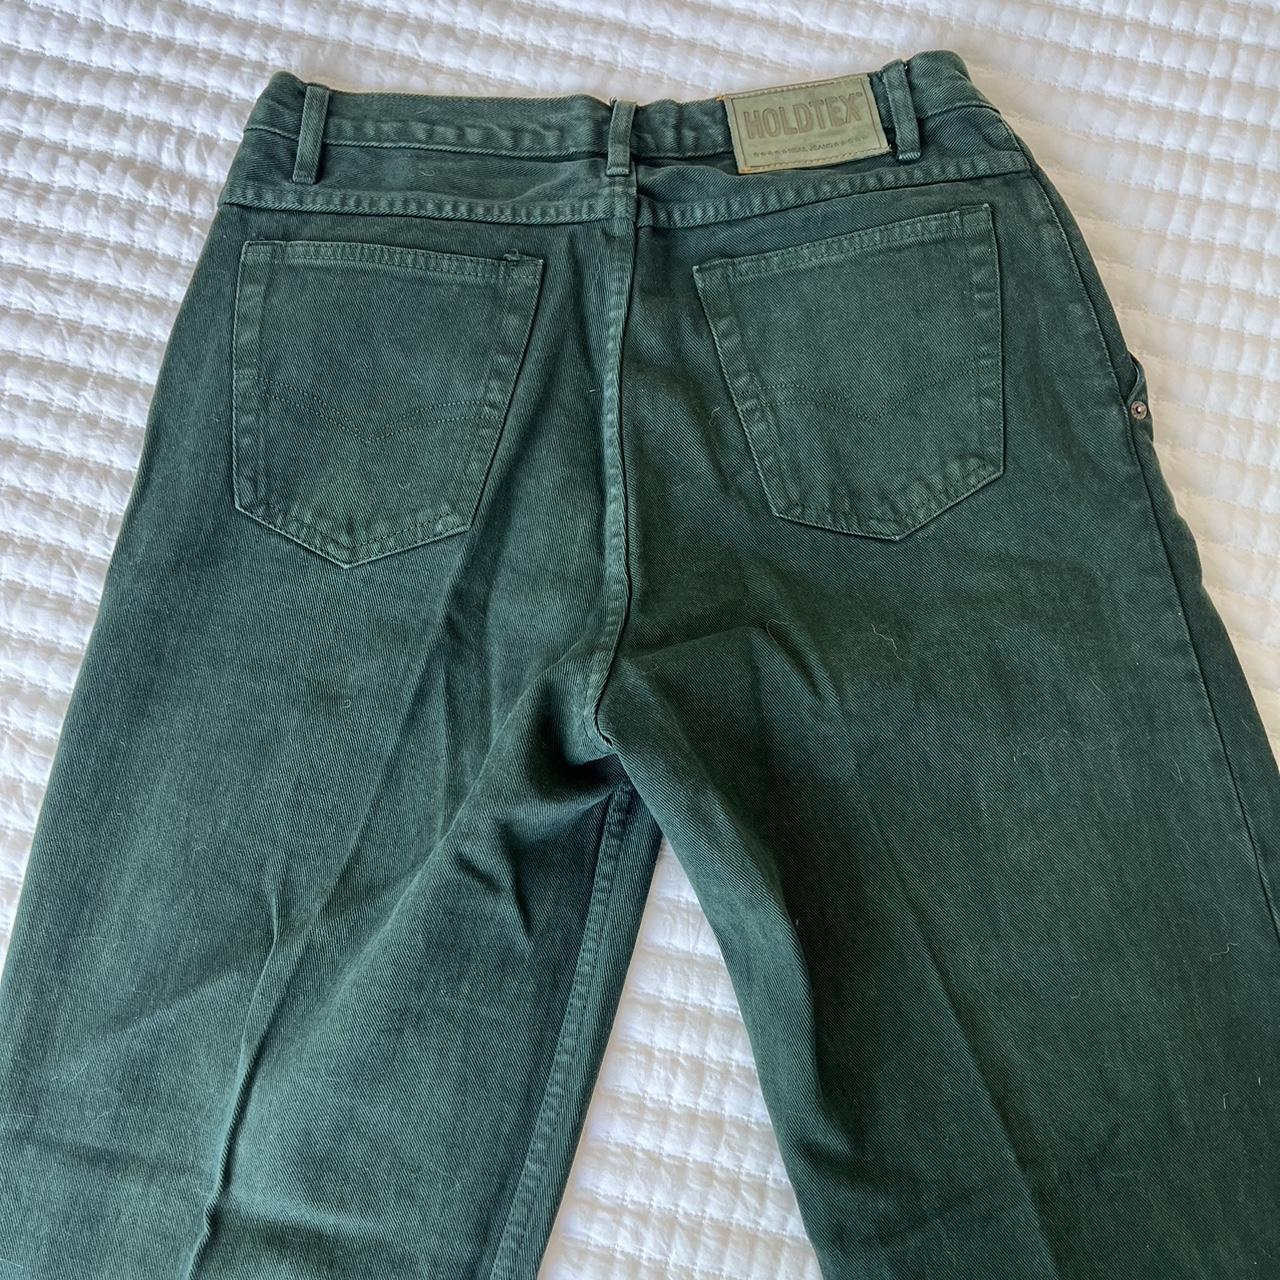 Forest green denim, jeans size 29 #green #denim #jeans - Depop